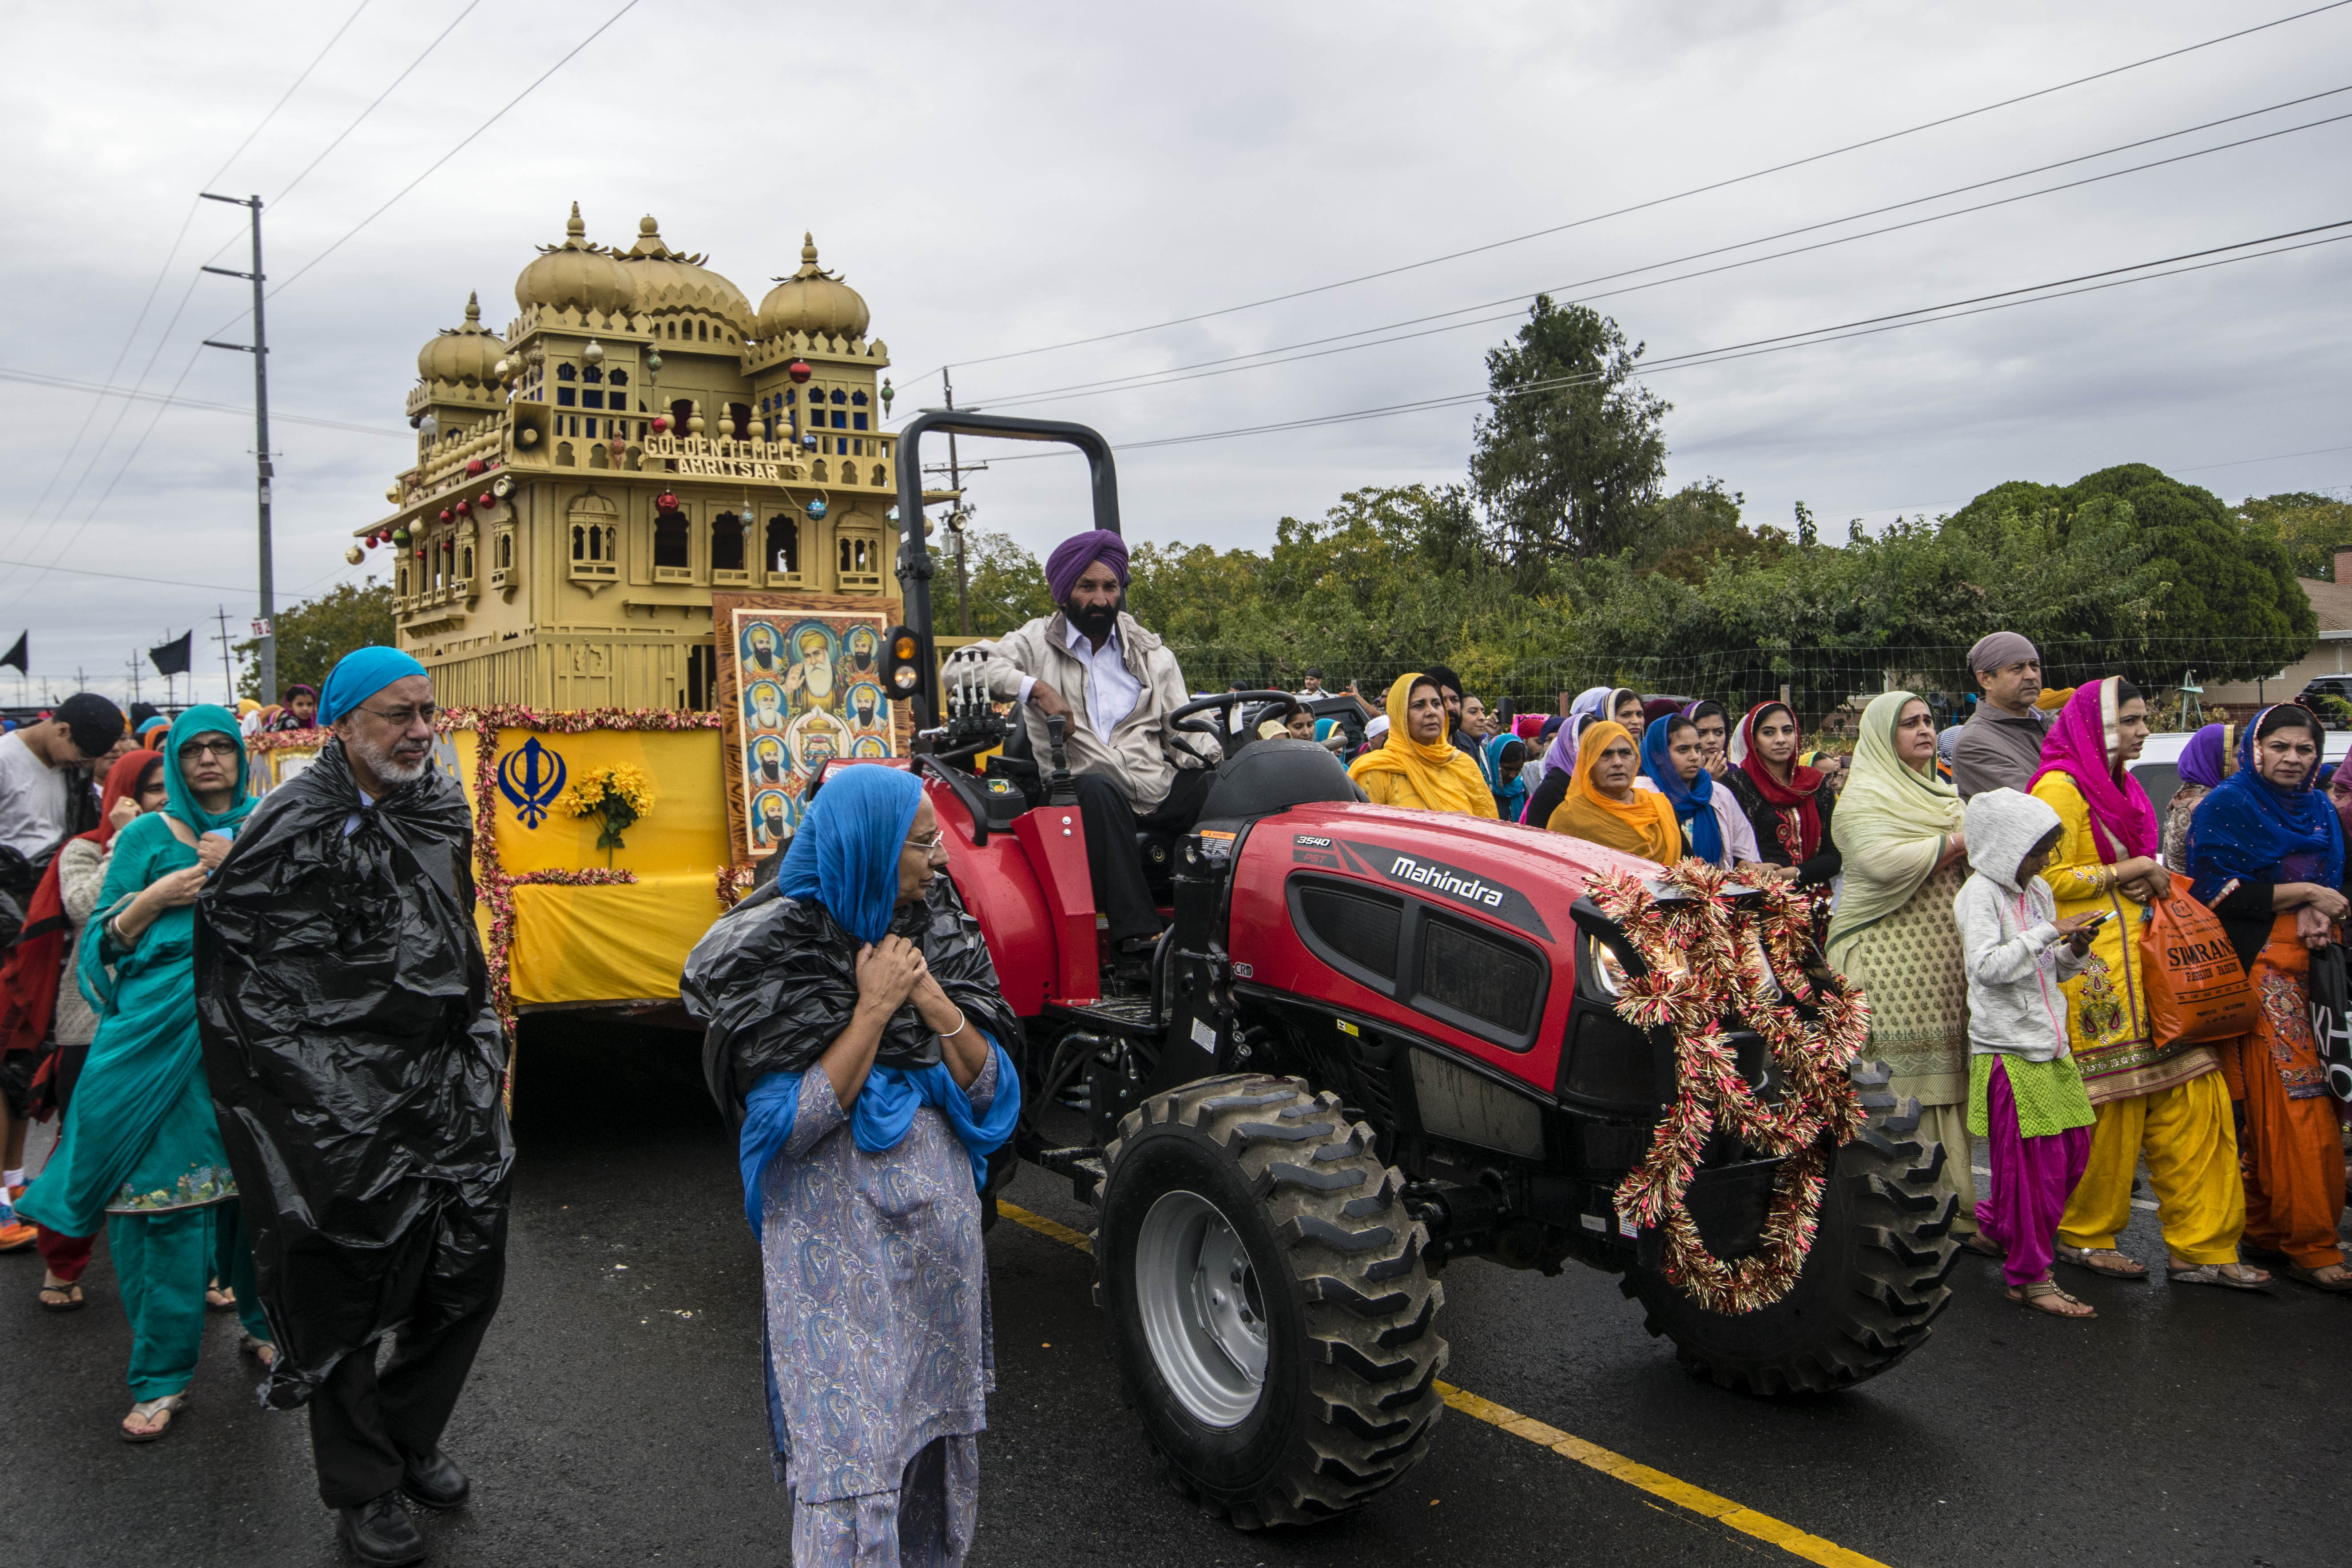 Sikh Festival and Parade in Yuba City Sacramento Valley